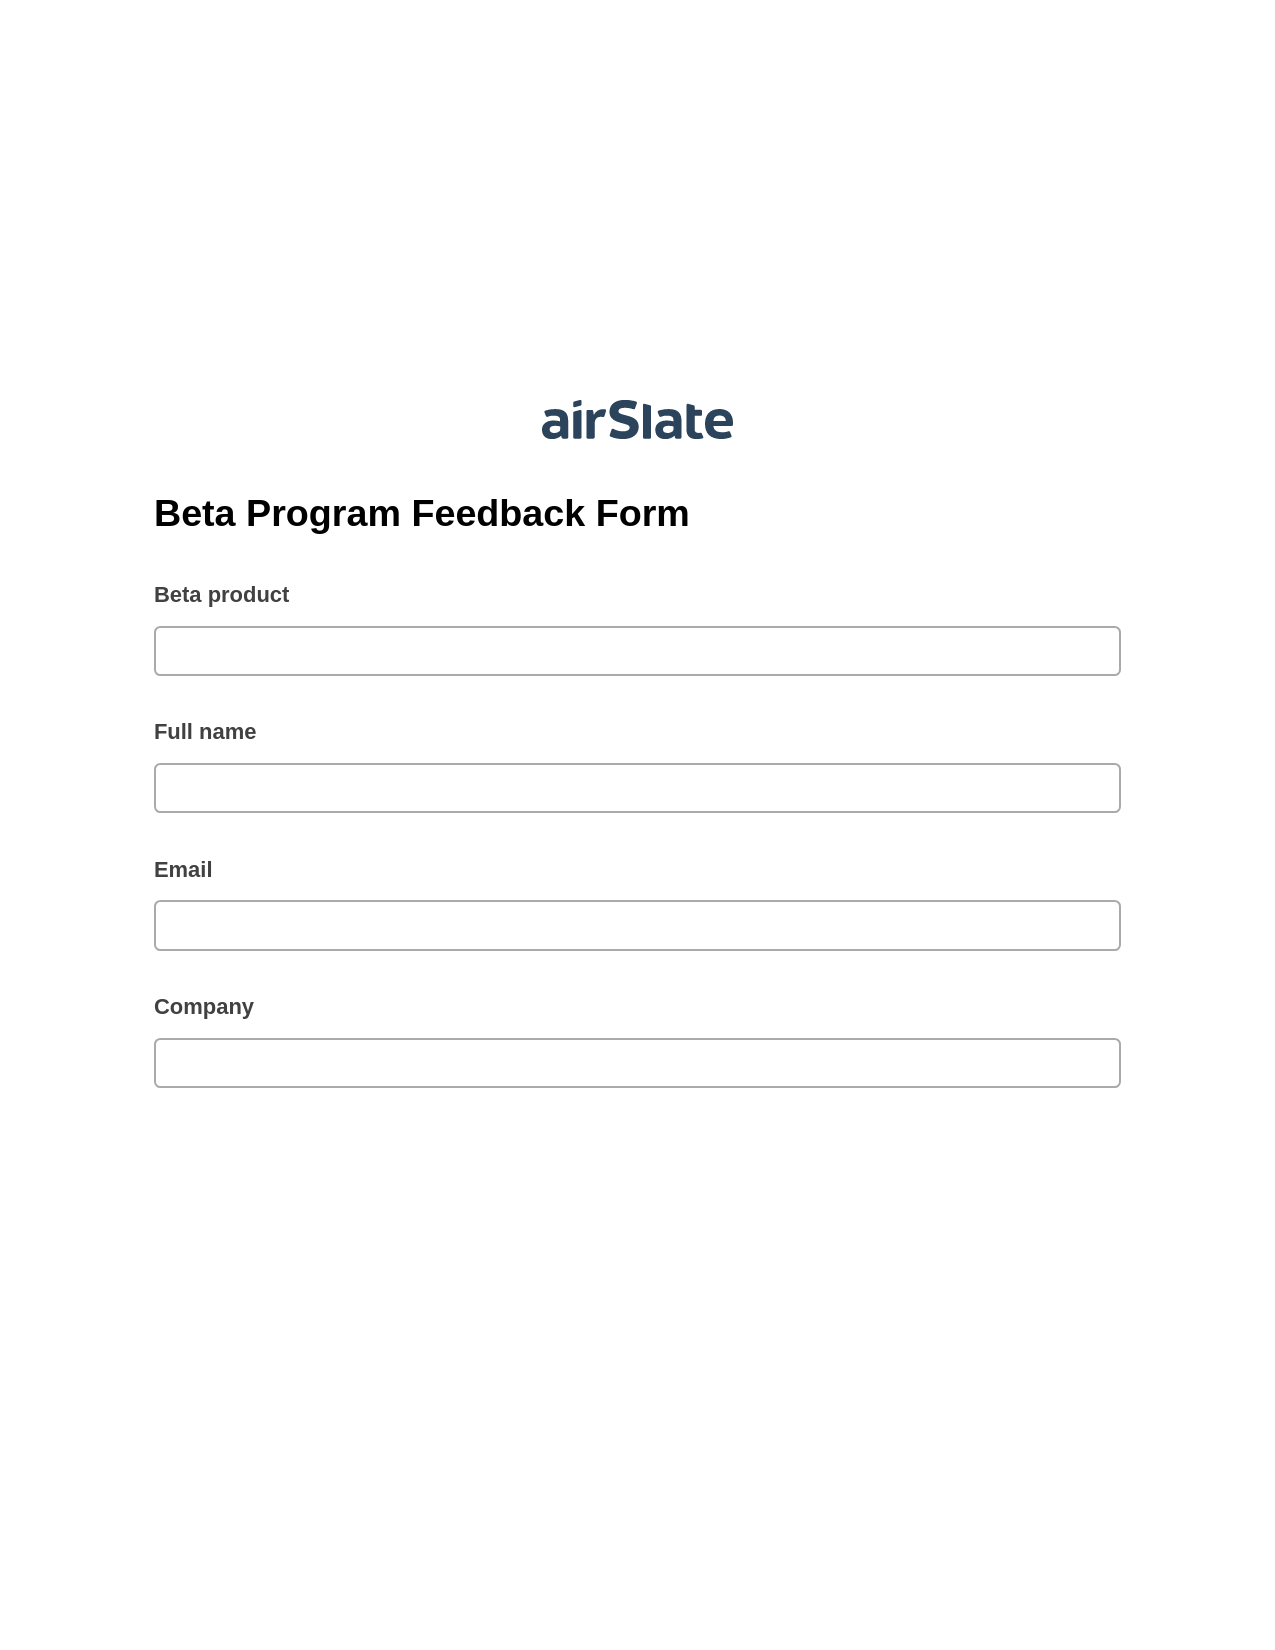 Beta Program Feedback Form Pre-fill Document Bot, Add Tags to Slate Bot, Slack Two-Way Binding Bot